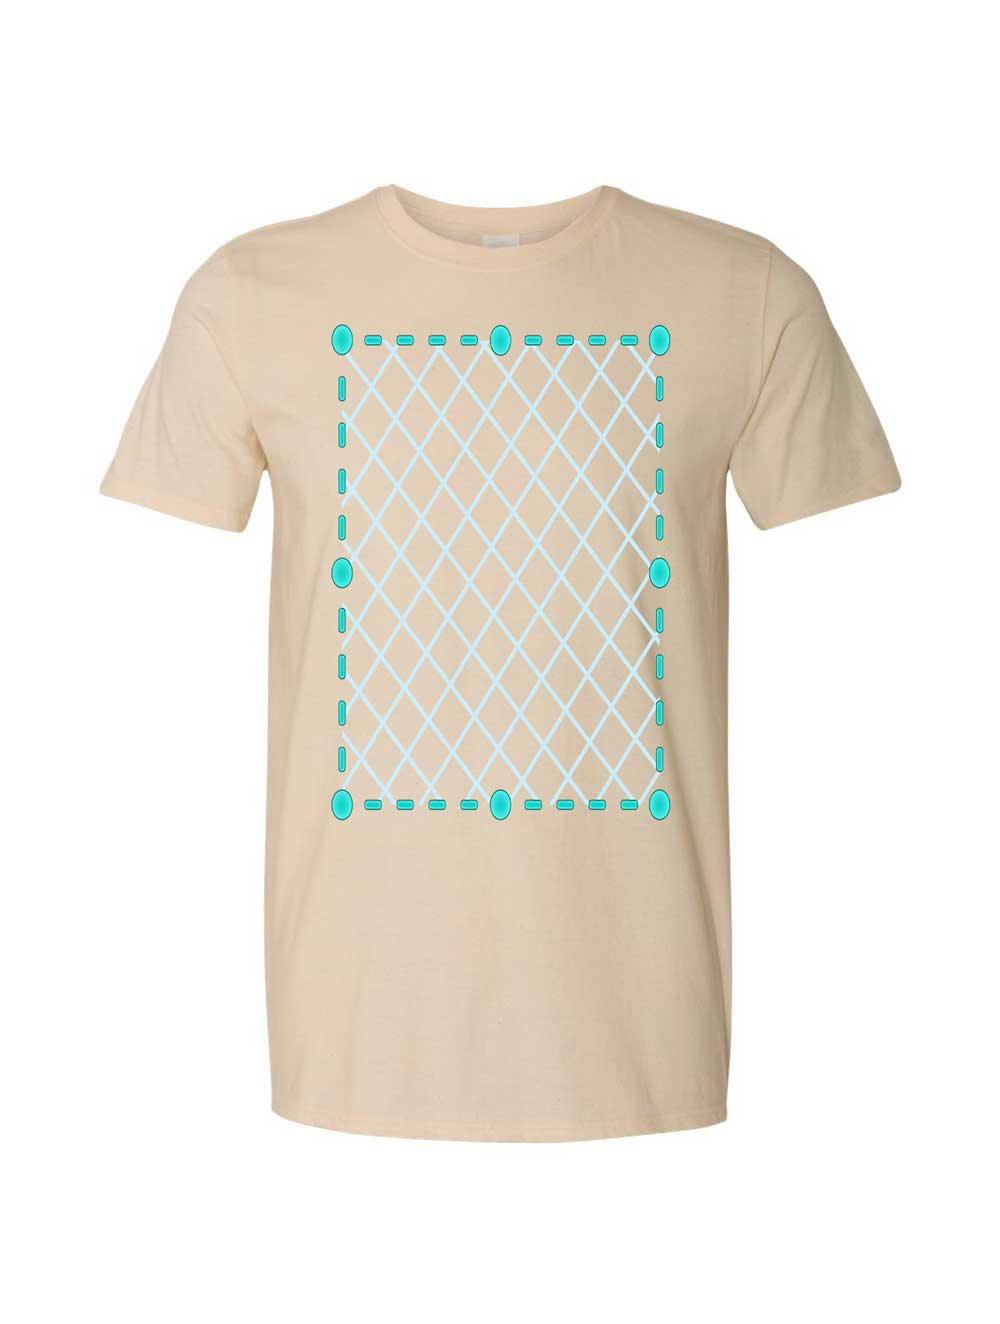 Gildan Softstyle T-Shirt - Constantly Create Shop